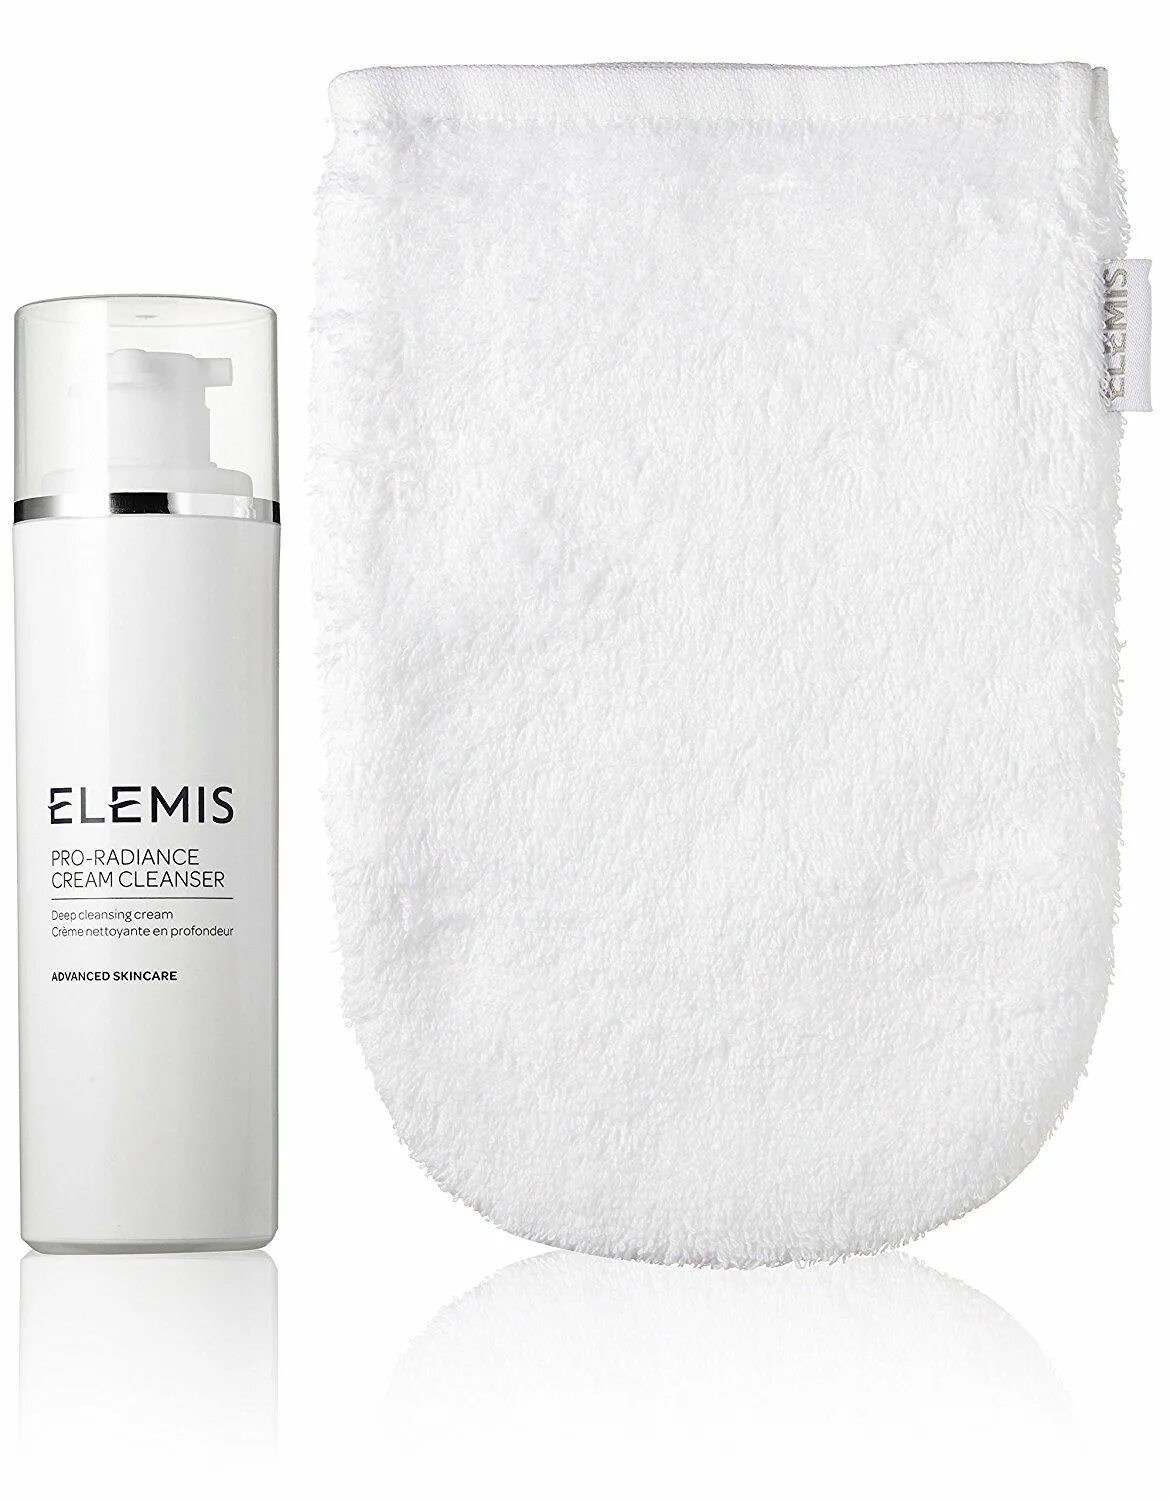 Крем cleanser. Elemis Pro Radiance. Ampl:en Purifying shot Cream Cleanser(150ml). Radiance крем. Пенка для лица Elemis.